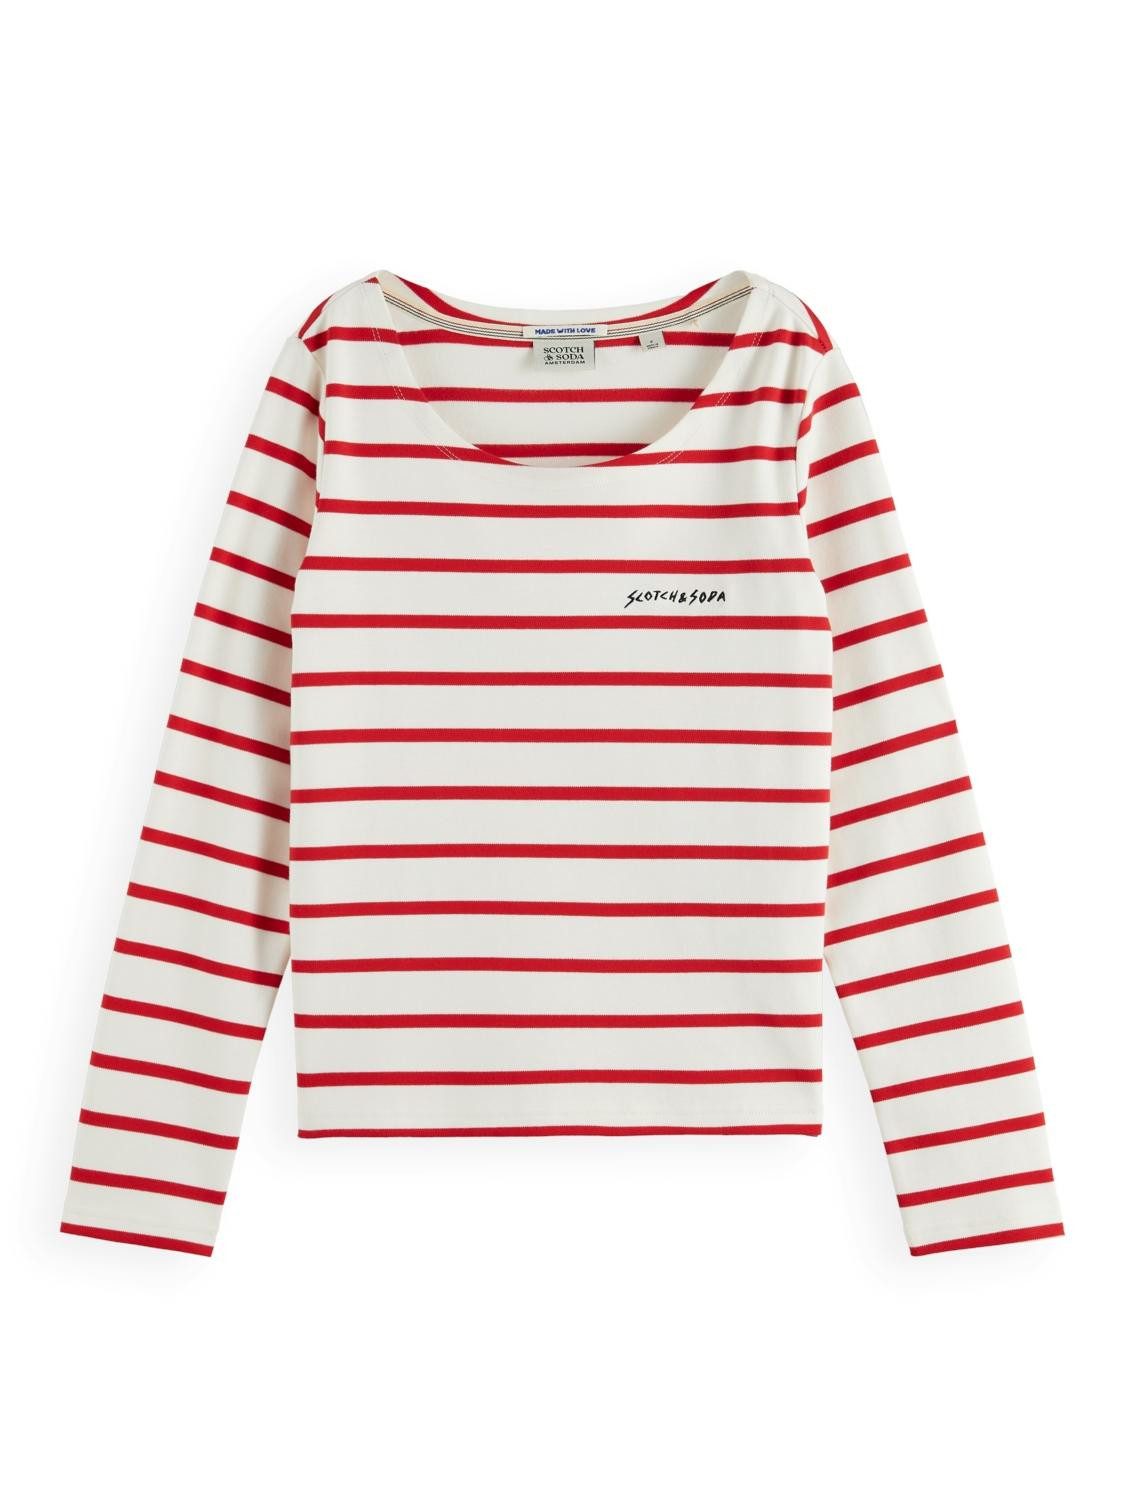 Scotch & Soda T-Shirt Breton striped longlseeve T-shirt, Amp Red